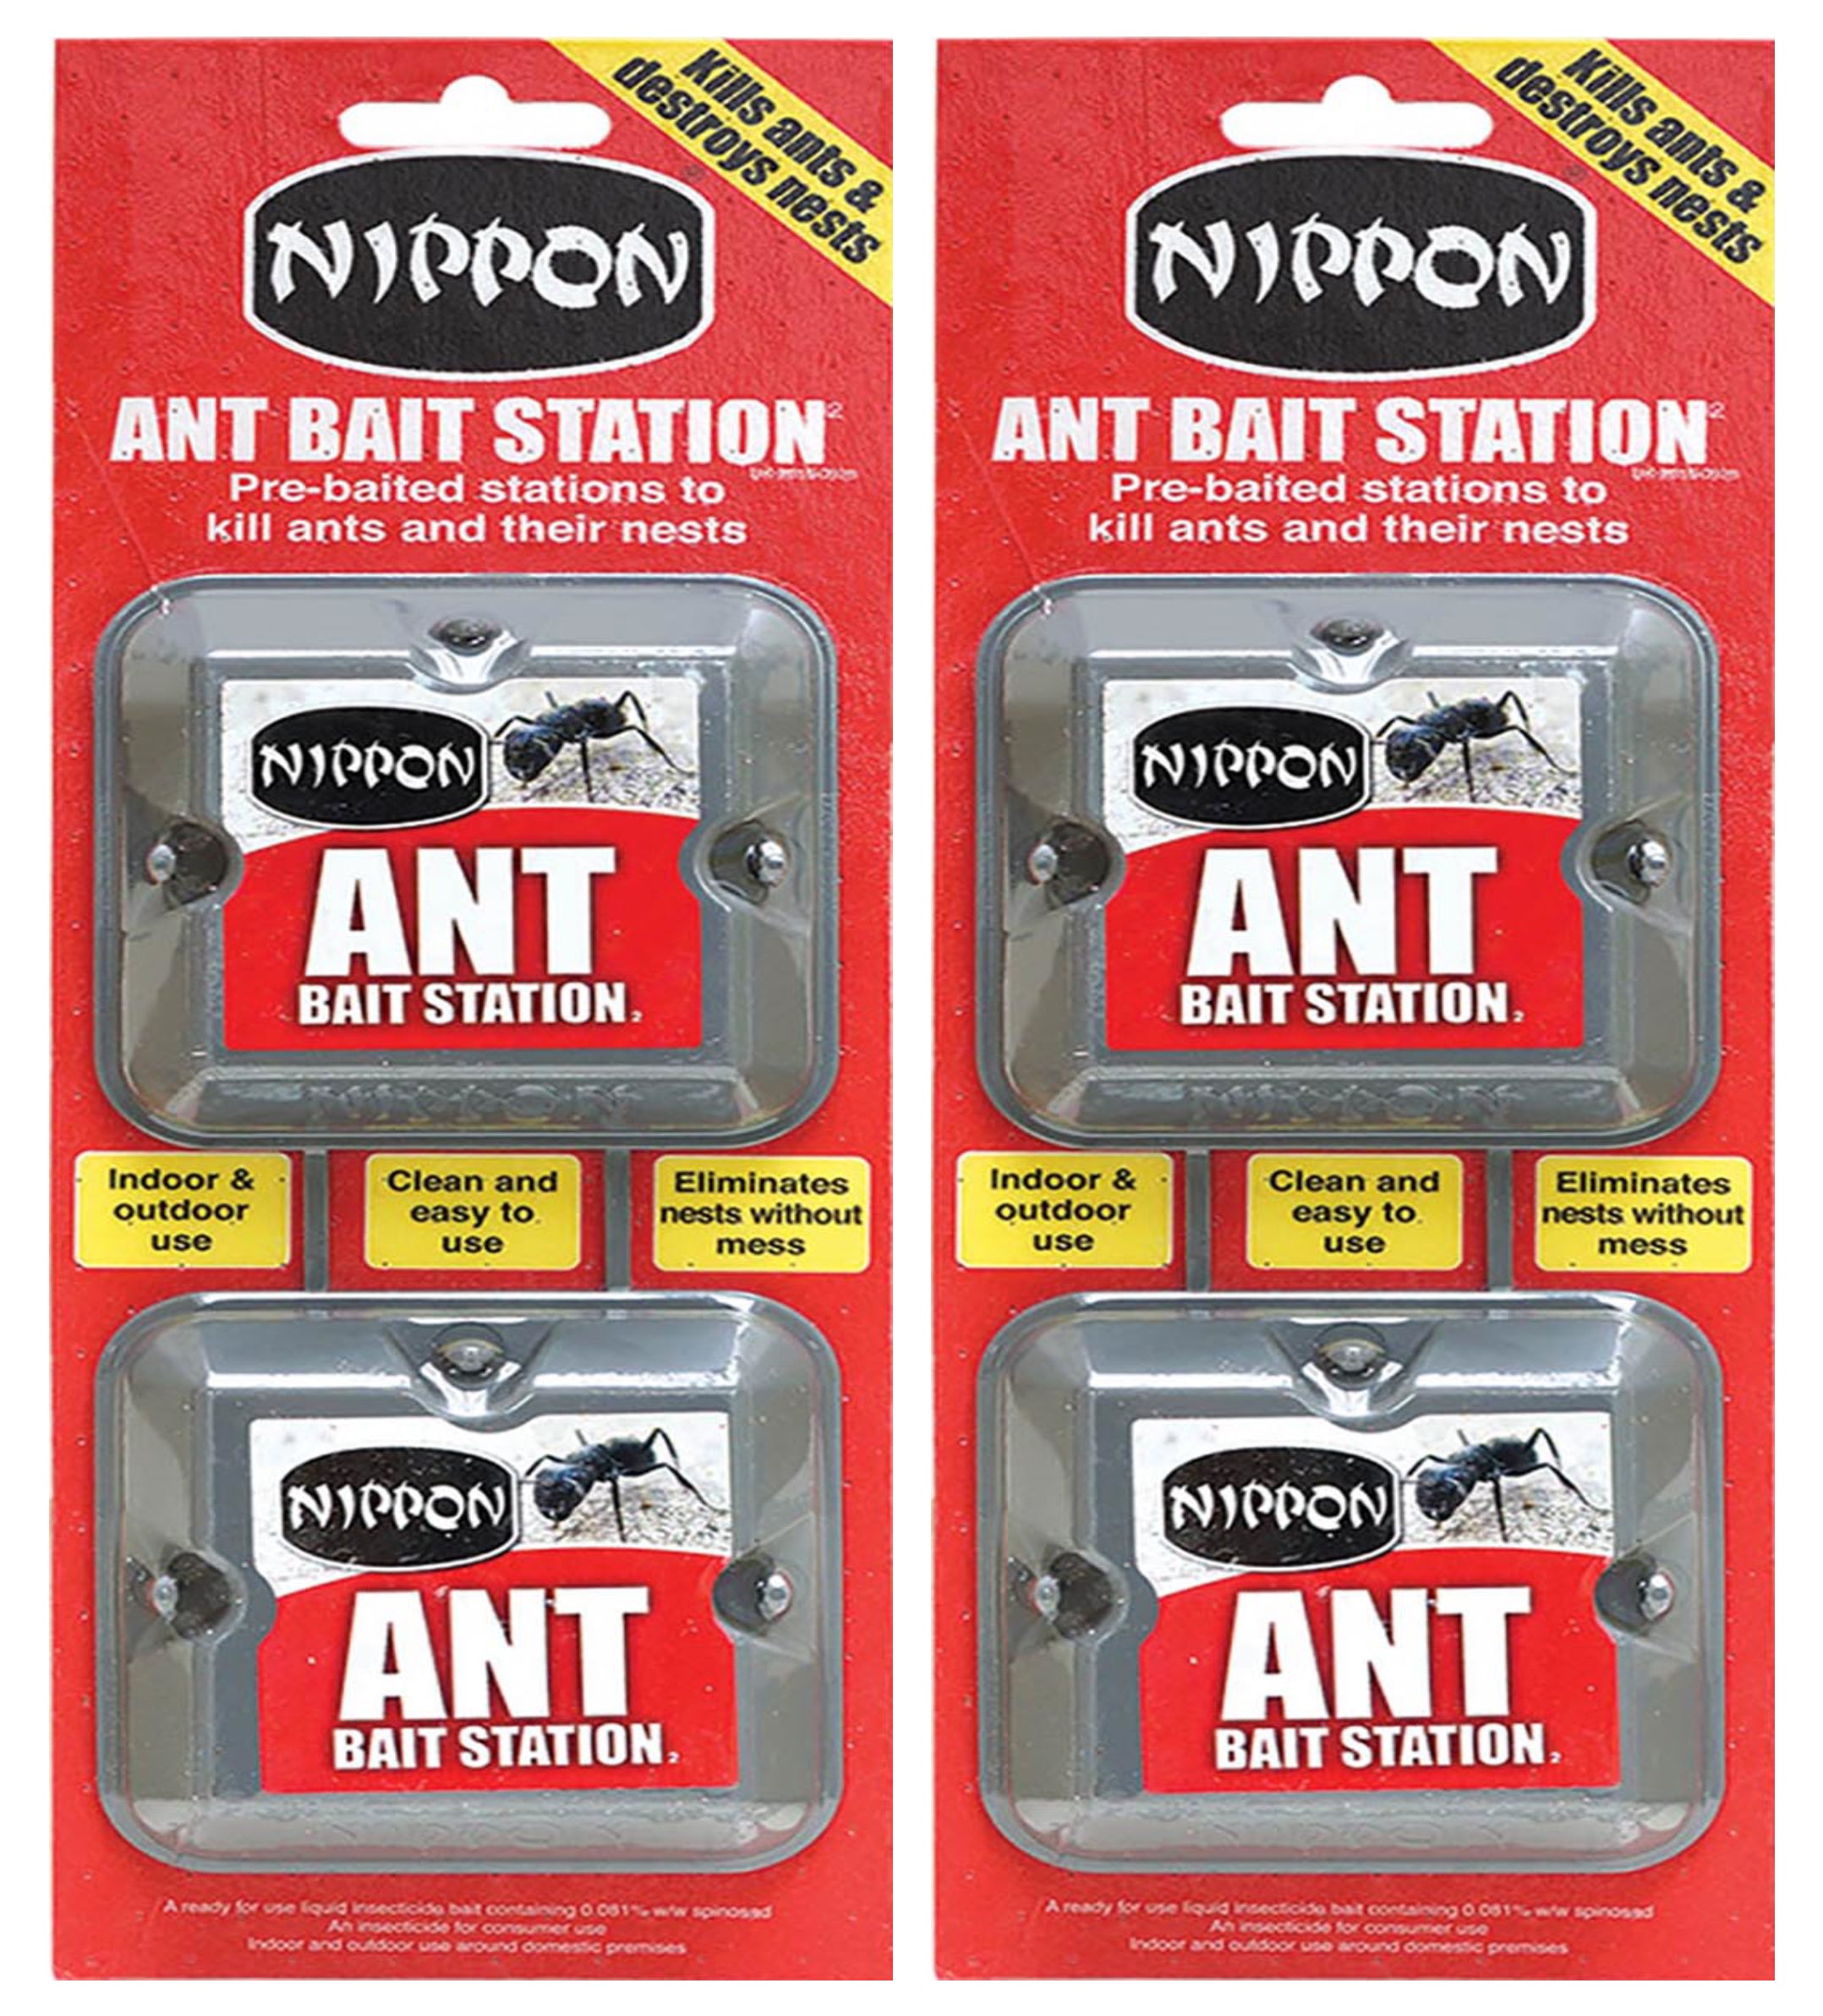 Nippon Ant Bait Station, Kill Ant , Kill Ant Nest - Moth Control